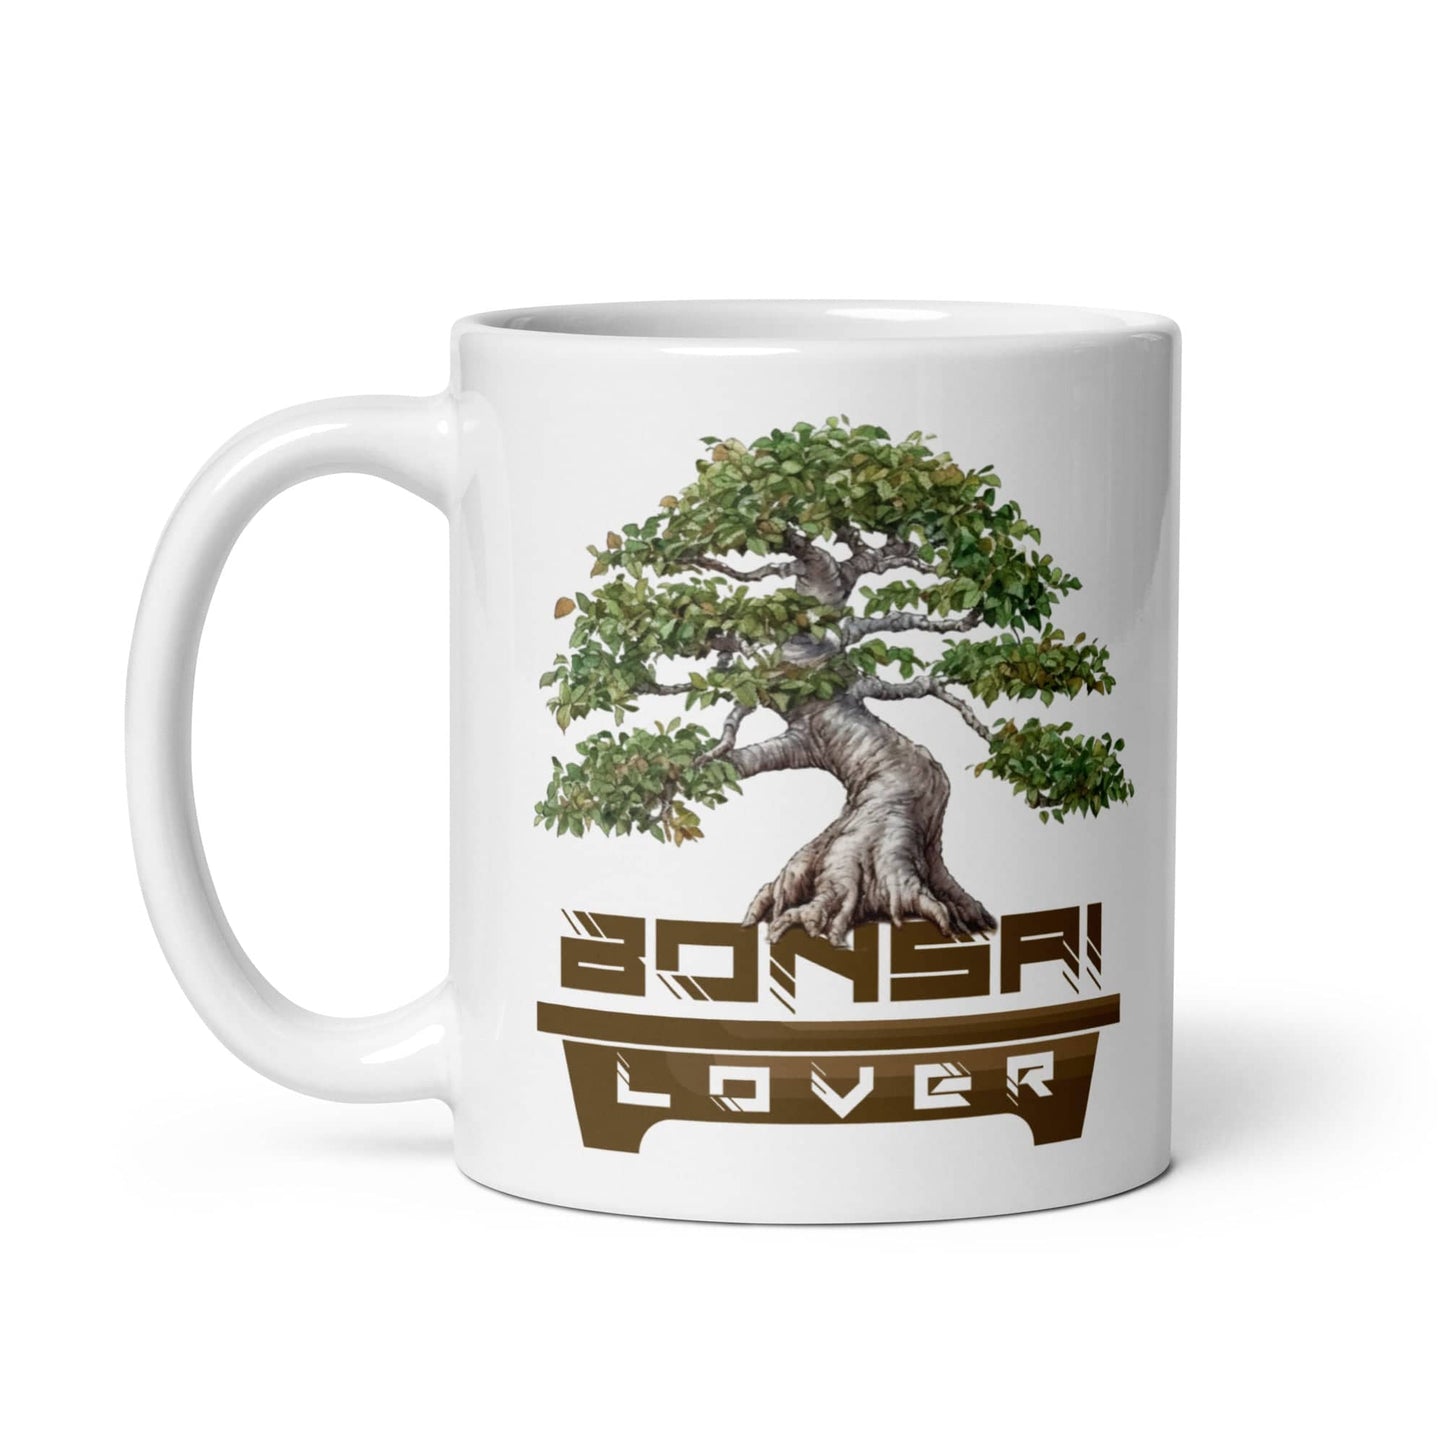 Bonsai Lover Coffee mug